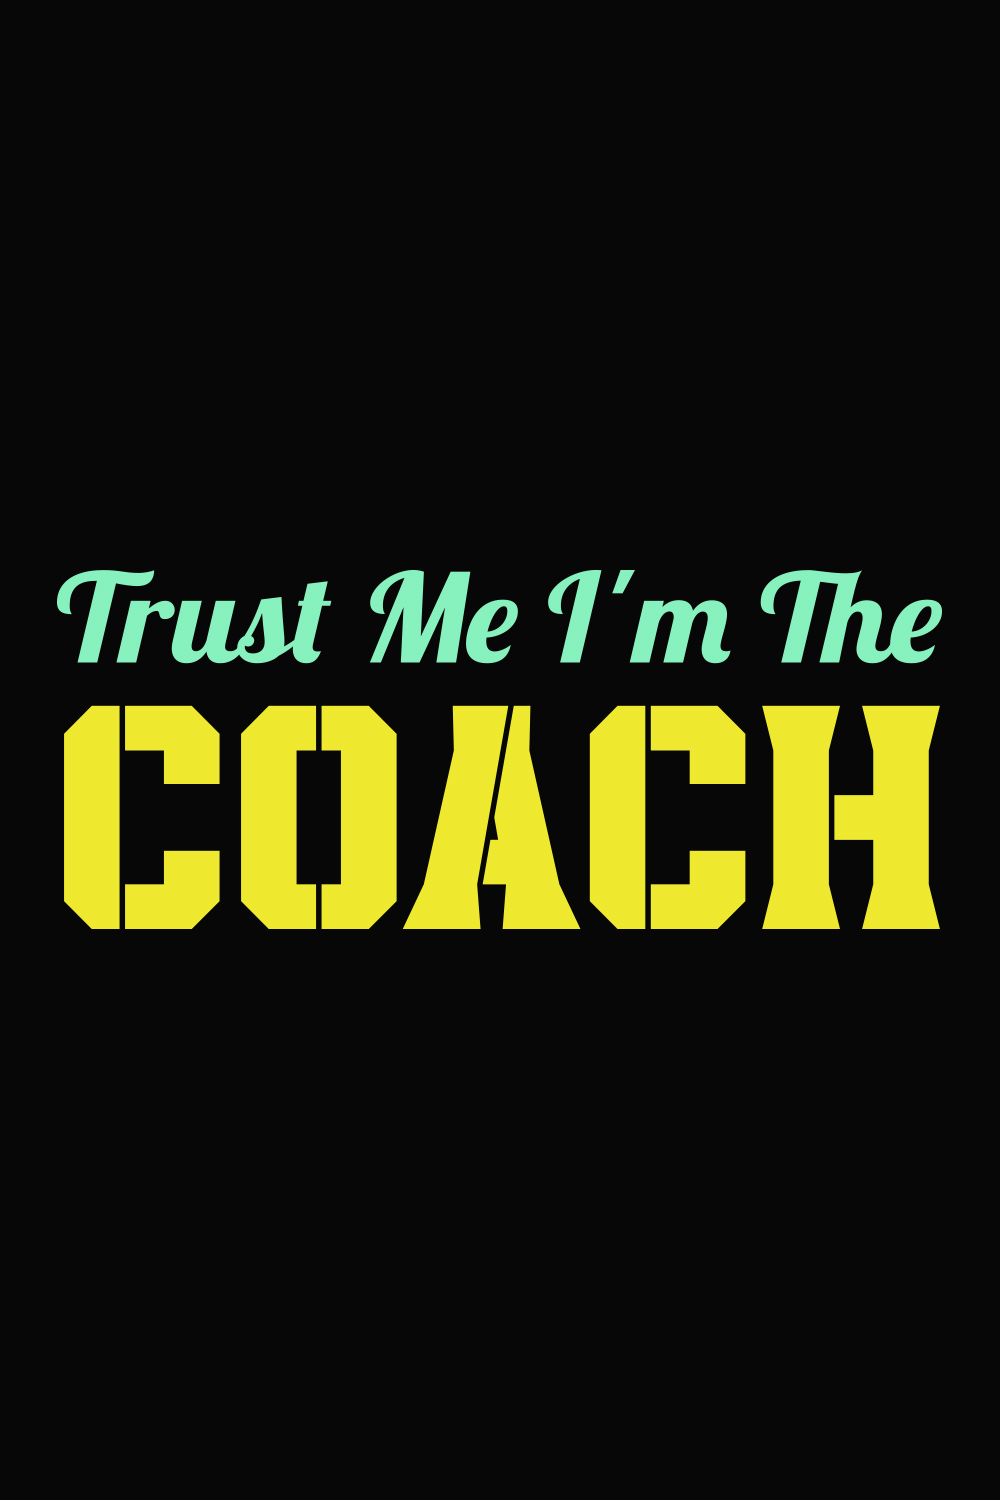 Trust Me I'm The Coach T-shirt Design pinterest image.